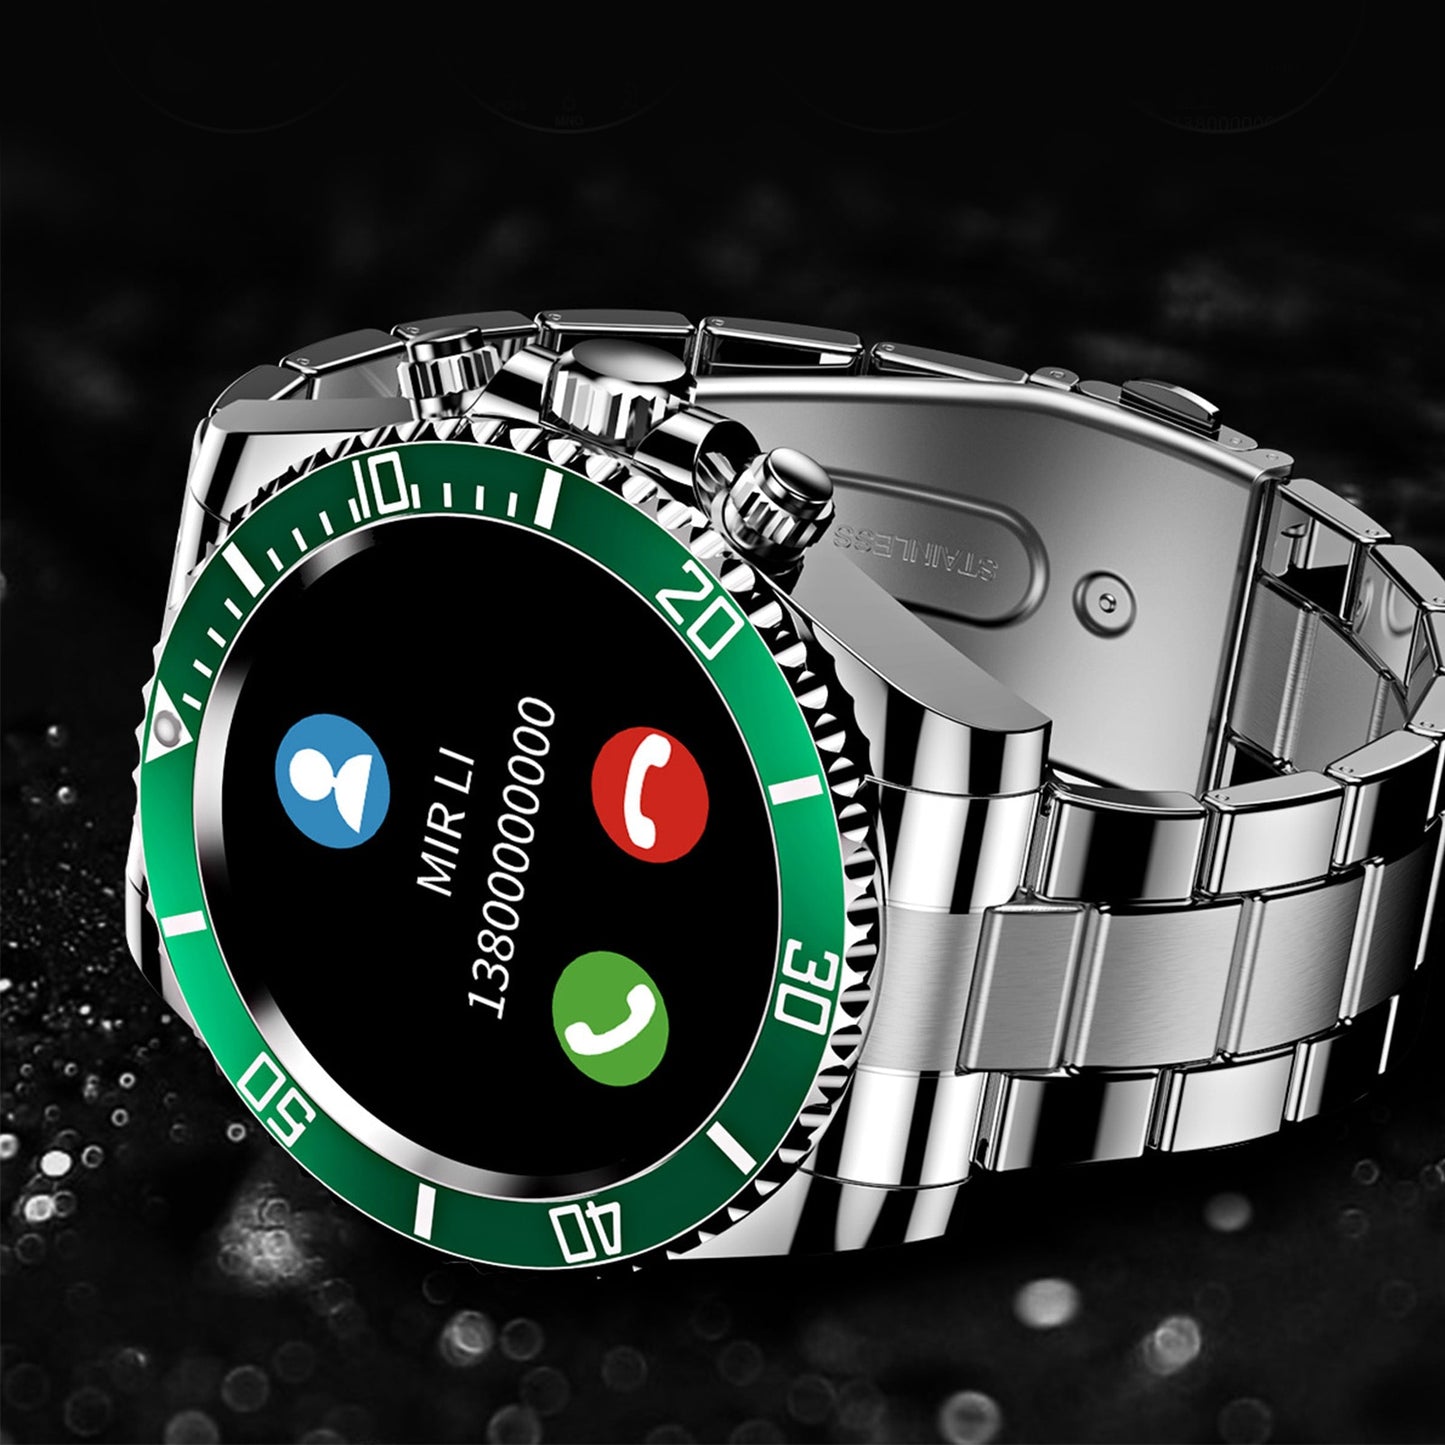 AW12 Bluetooth Call Smart Watch Full Touch Screen/Sports Watch Waterproof Mens